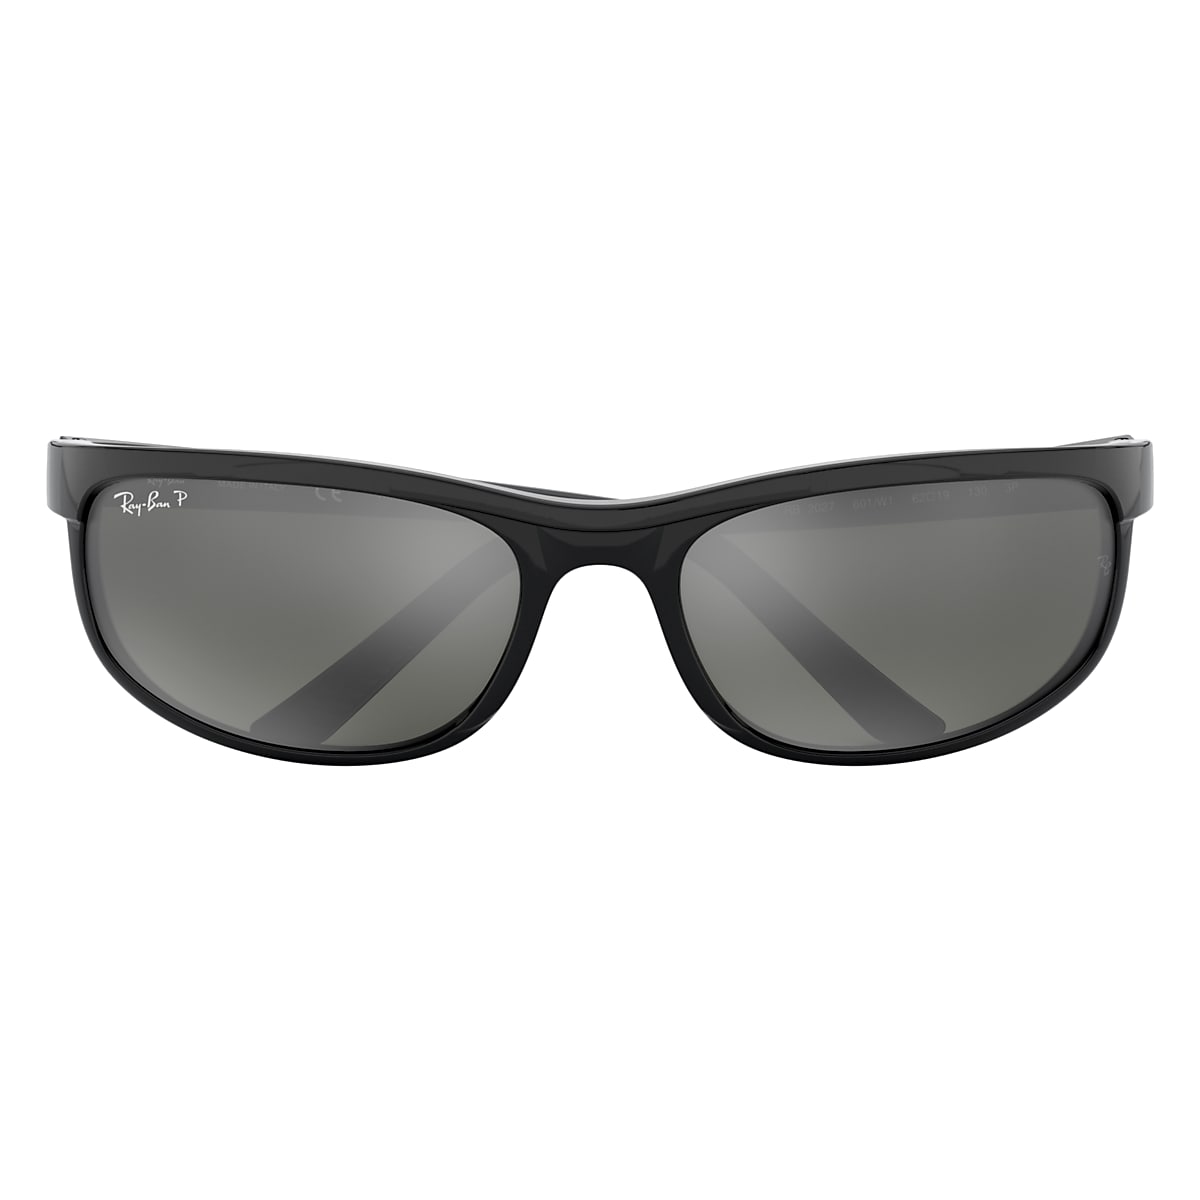 PREDATOR 2 Sunglasses in Black Grey - RB2027 Ray-Ban®